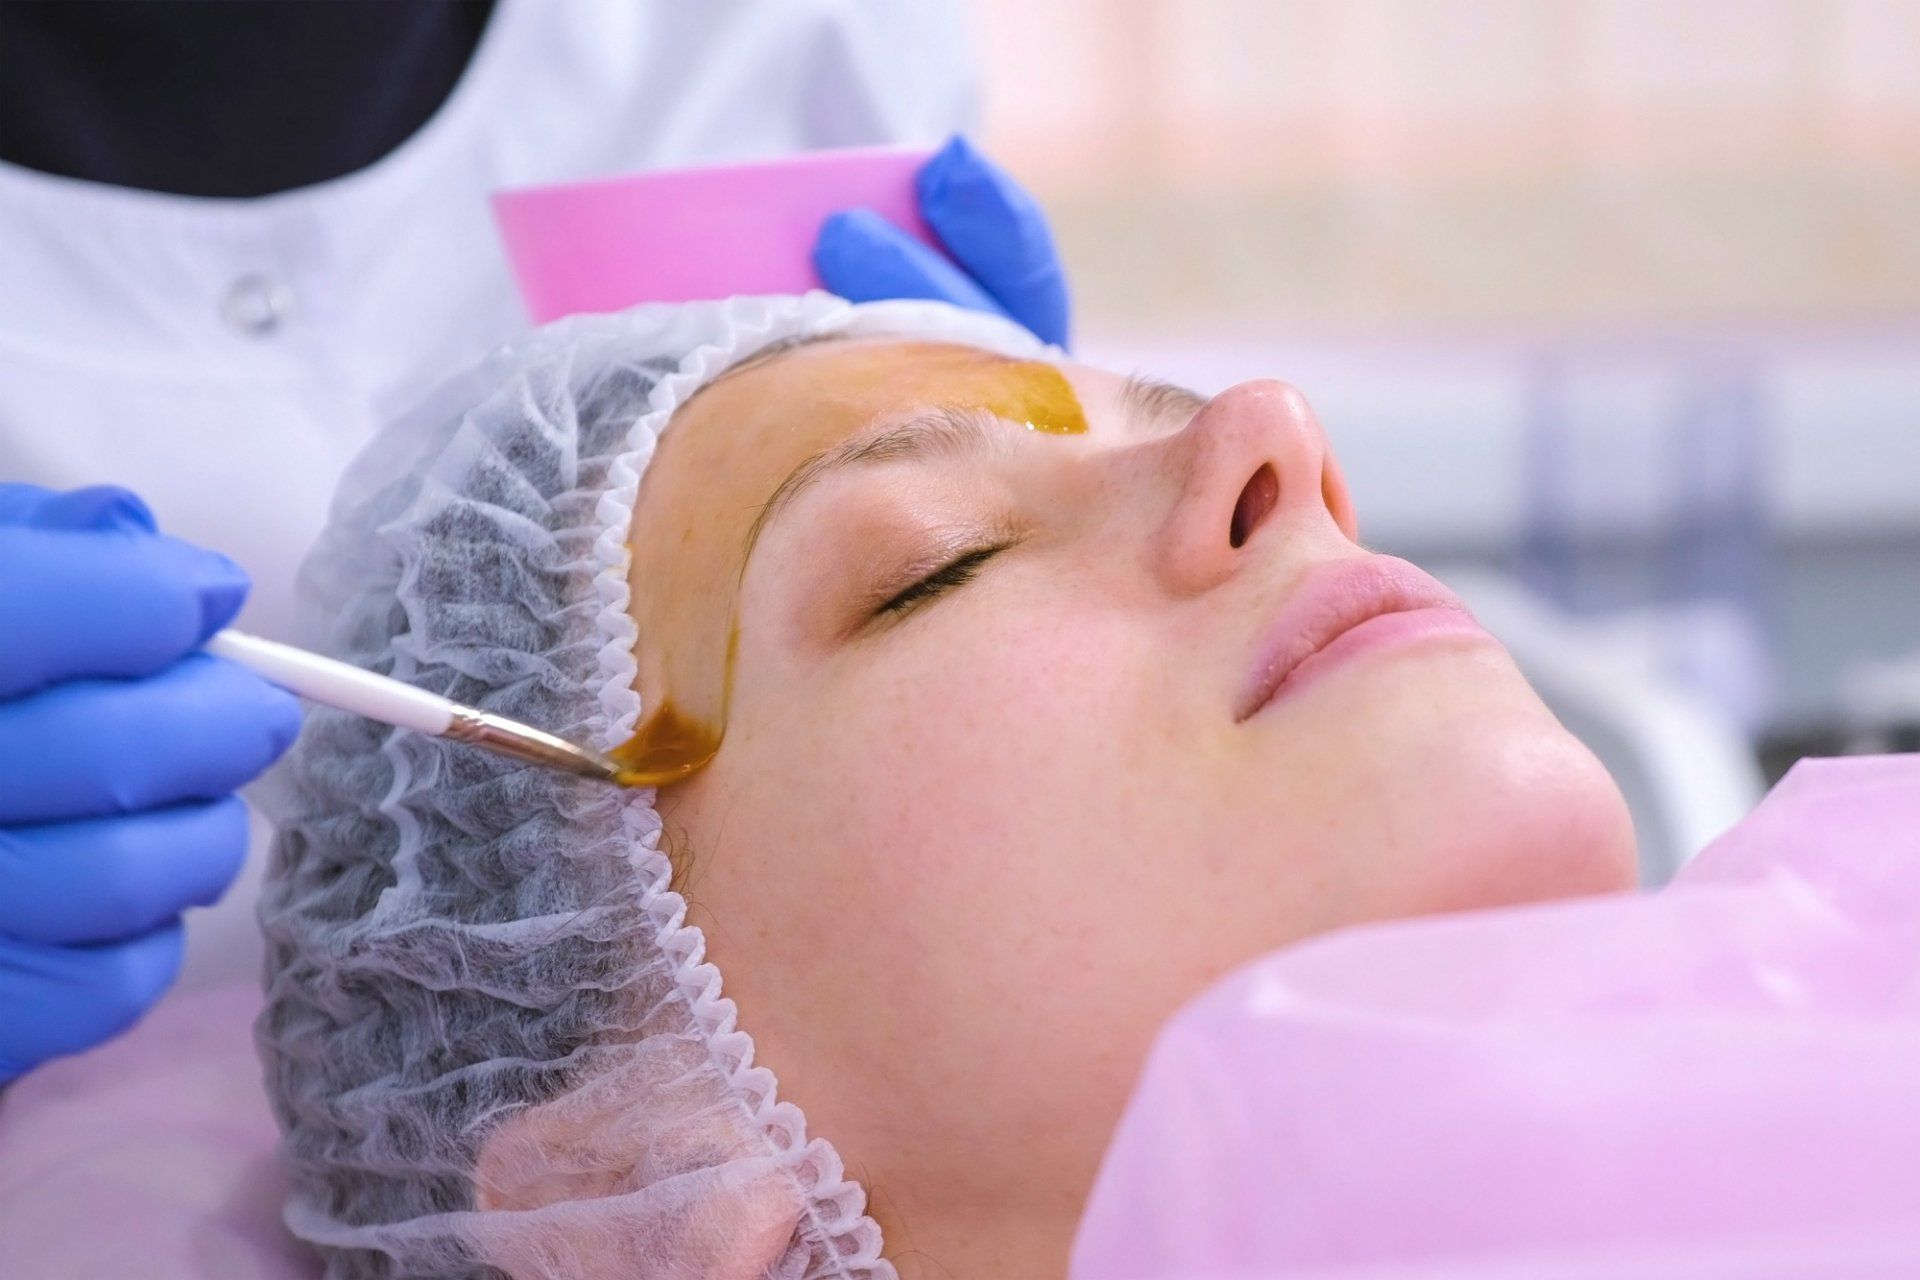 dermatologist applies chemical peel to female patient's face